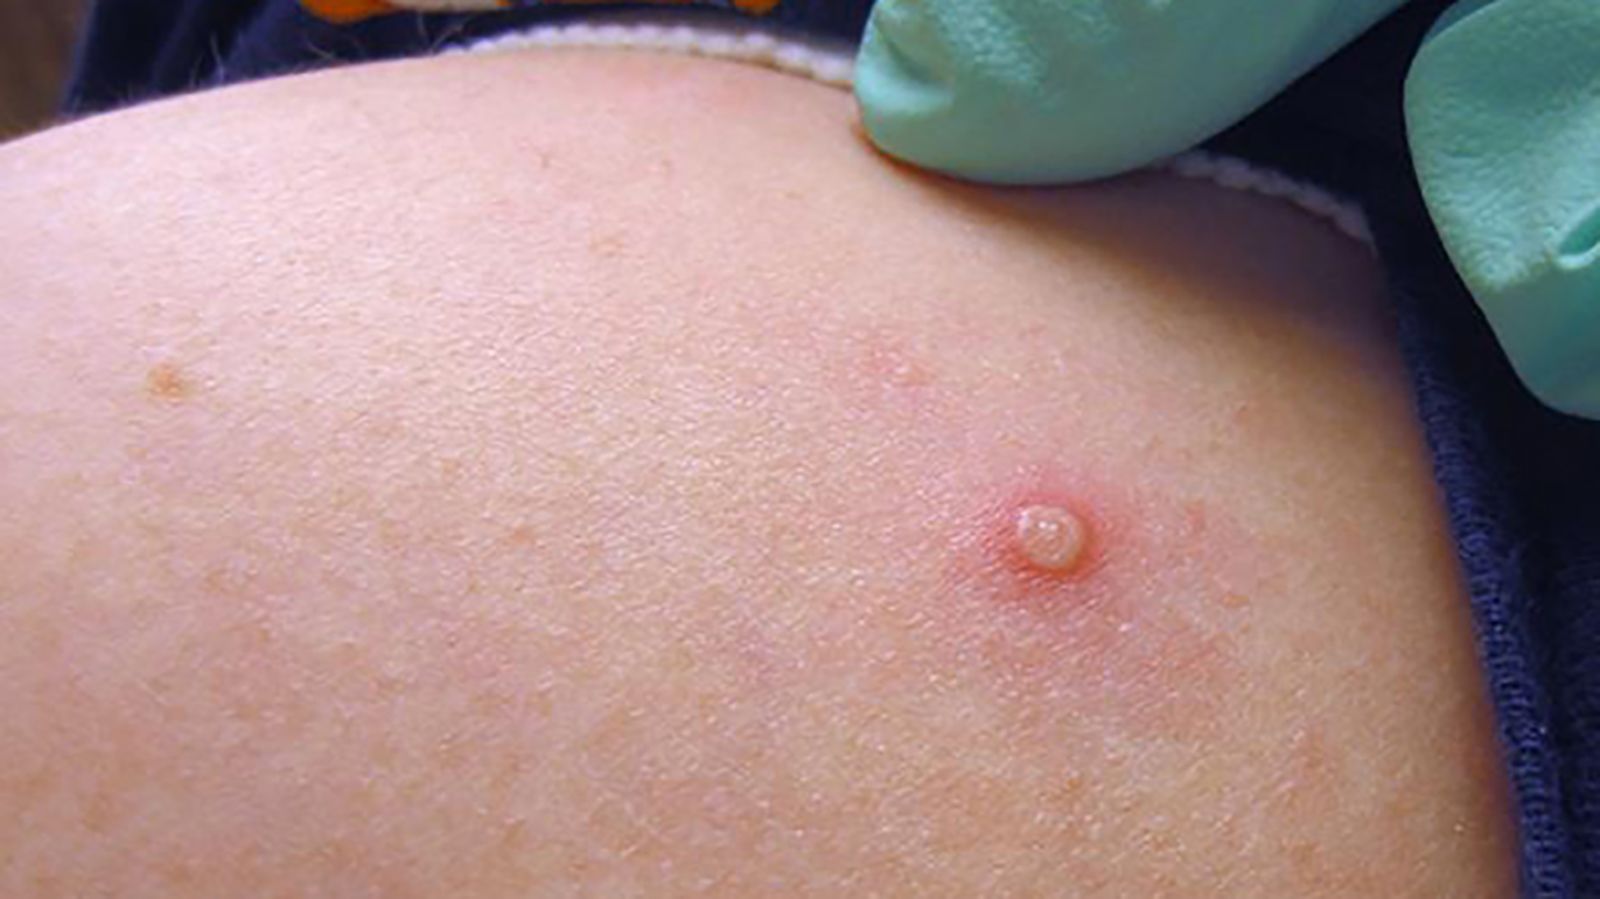 What is Monkeypox?